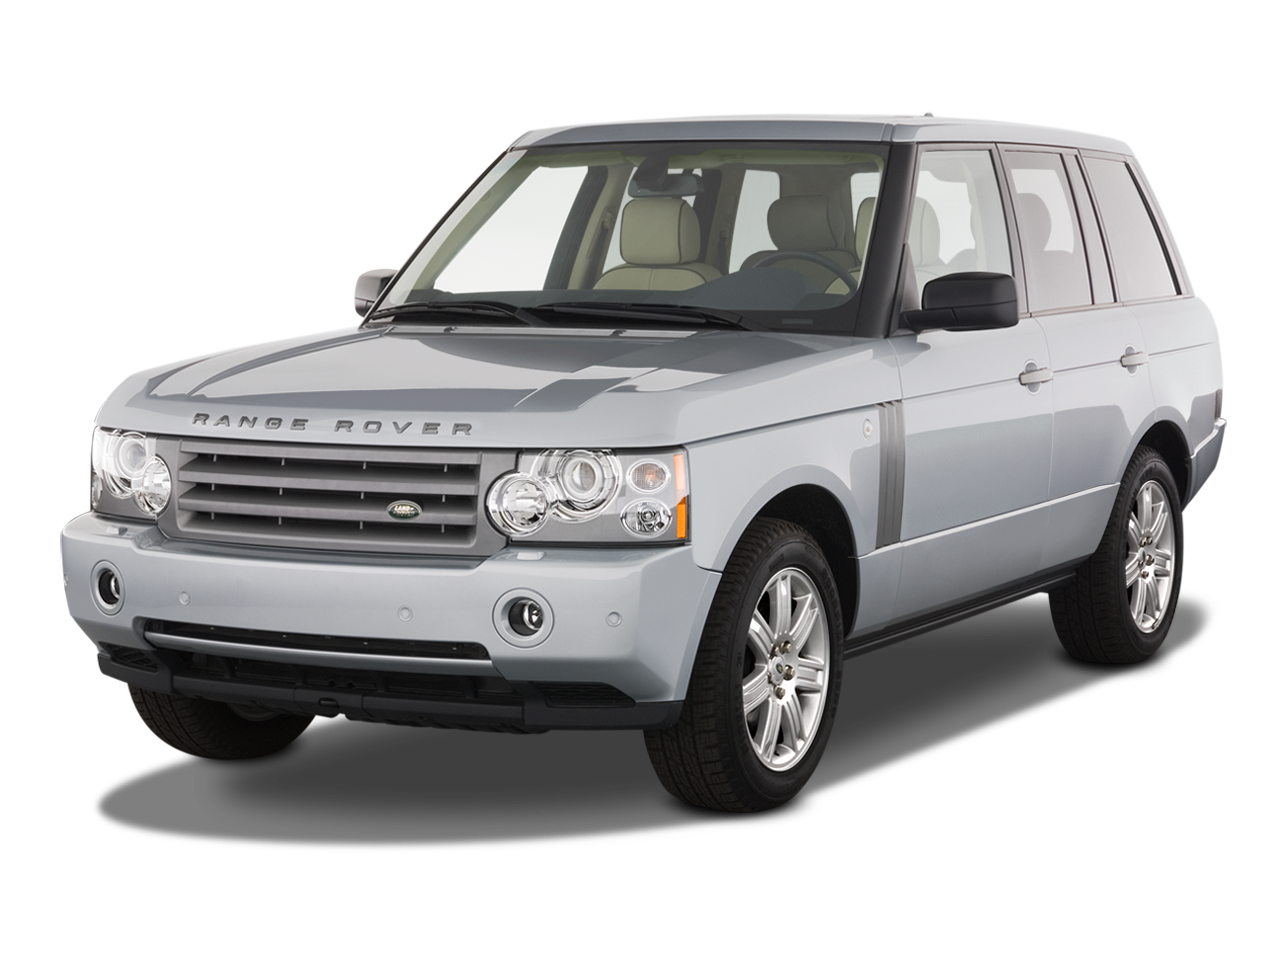 26 mars 2008 – Ford vend Jaguar et Land Rover à Tata Motors